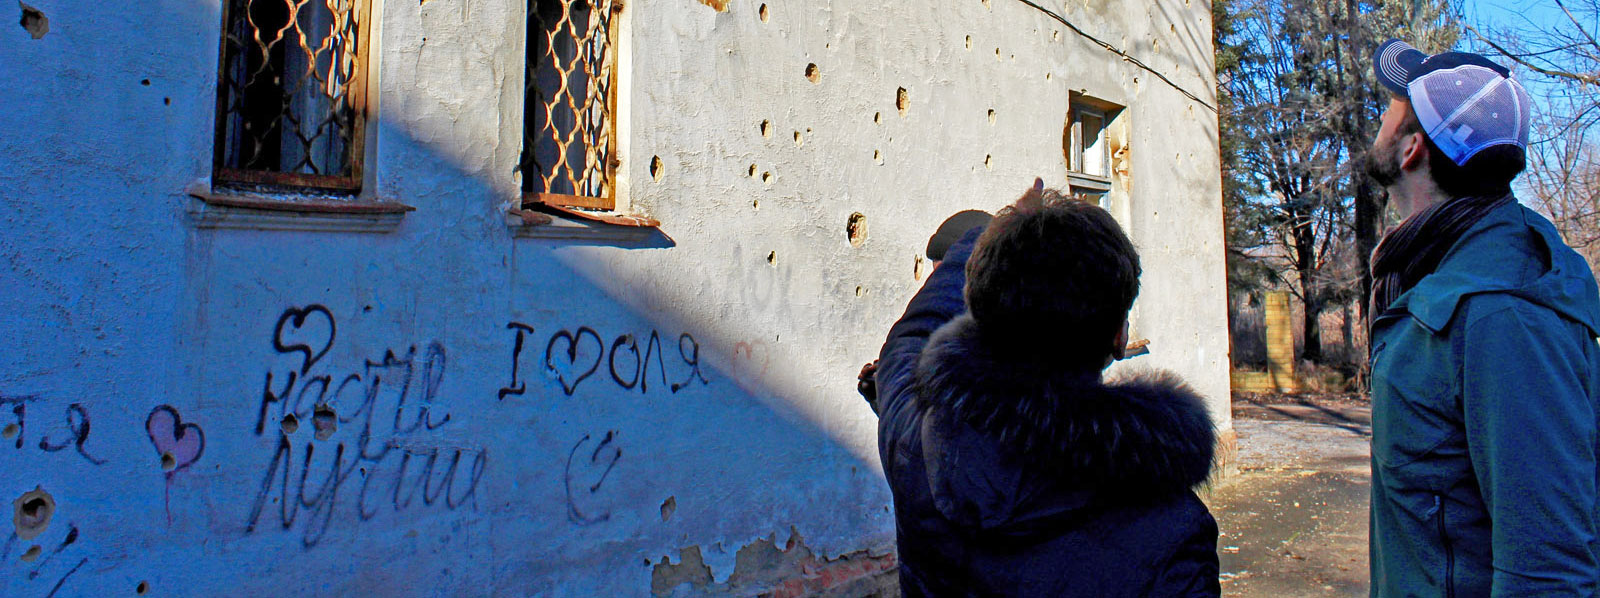 Rebuilding hope on the frontlines in Ukraine